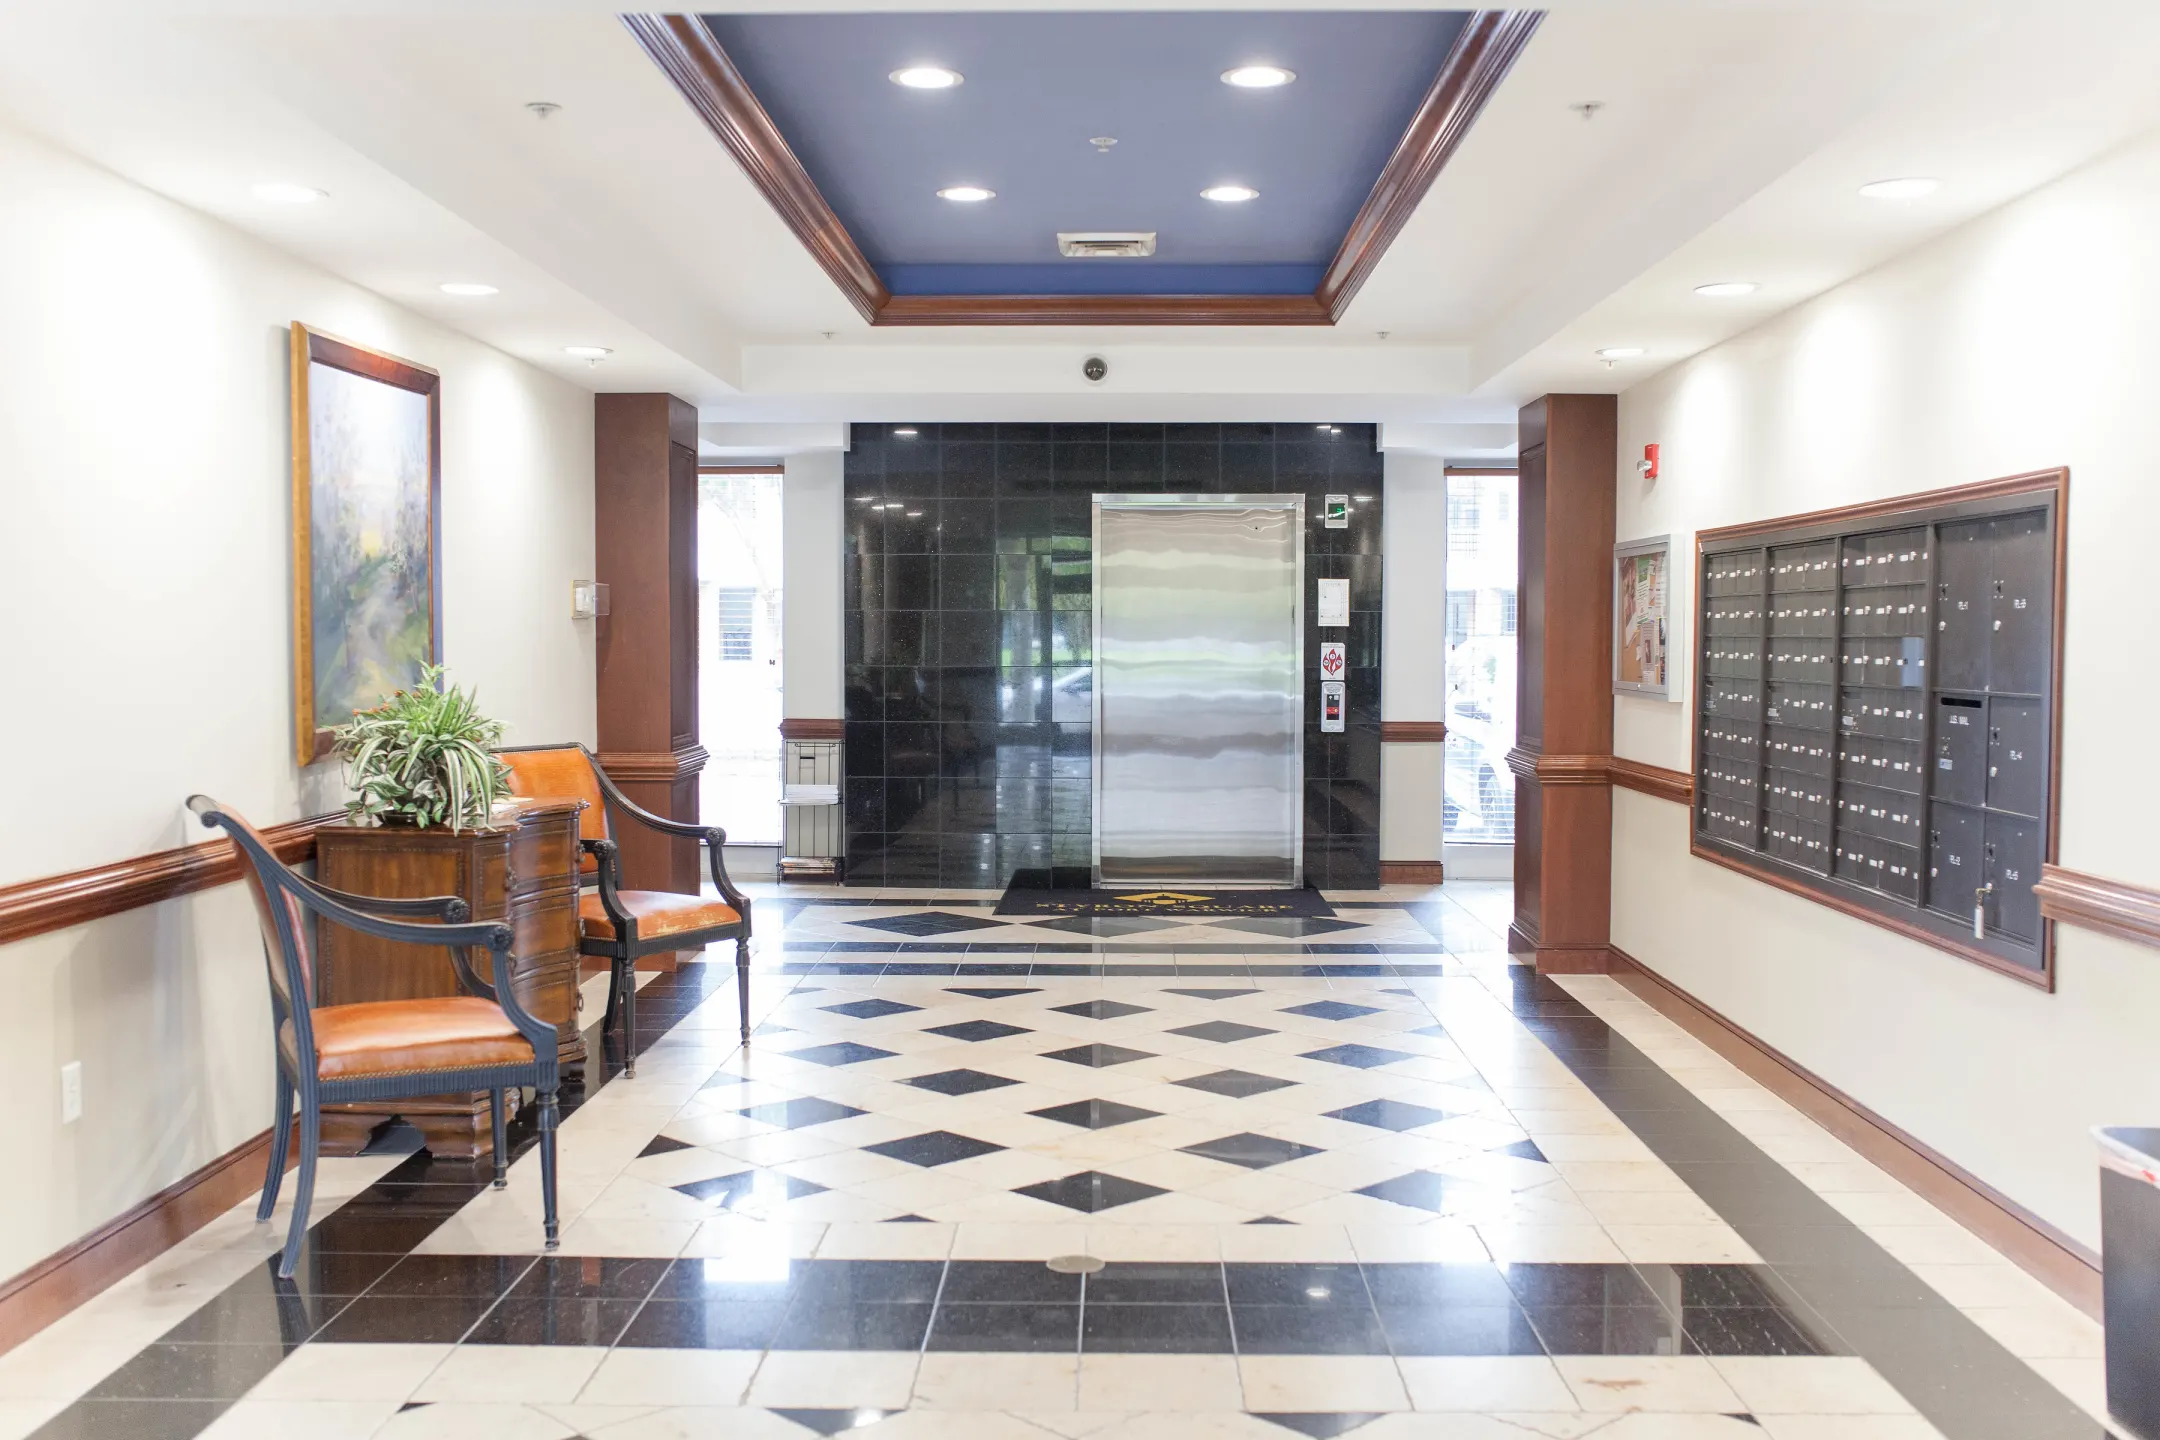 Foyer, Entryway - Styron Square - Newport News, VA